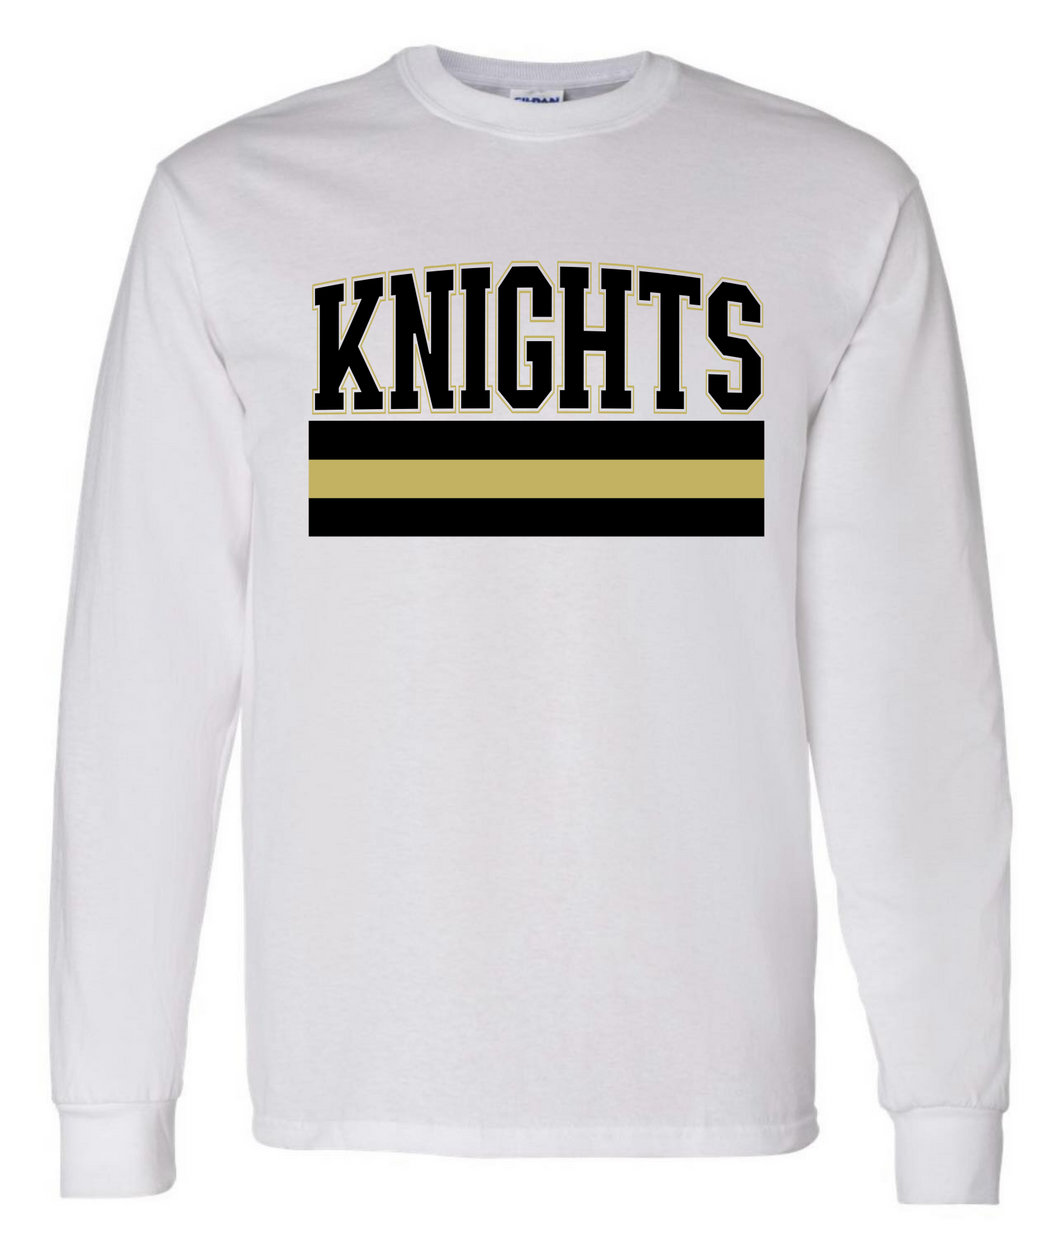 Knights Varsity Lines longsleeve tshirt